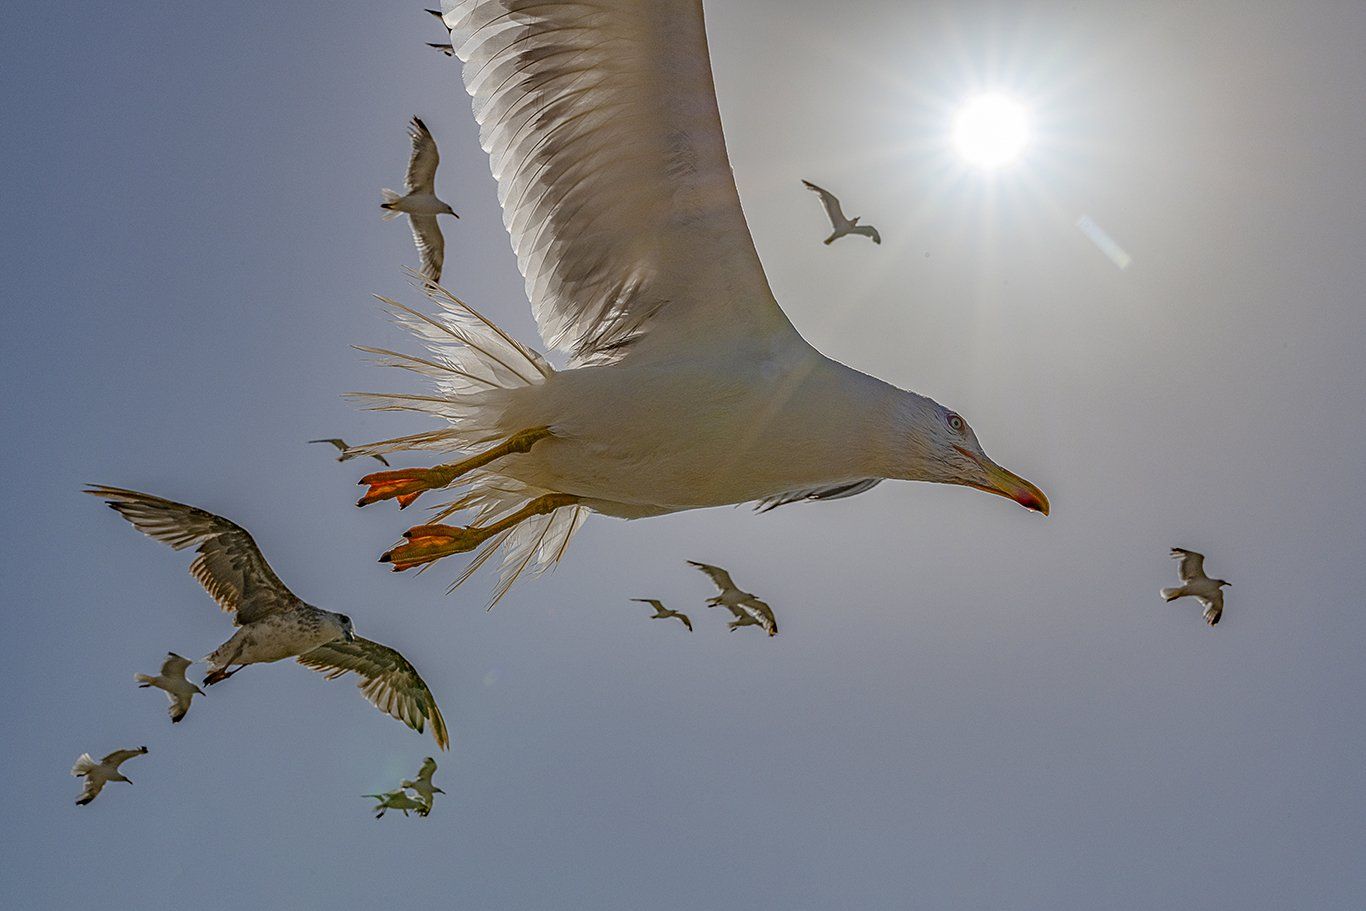 The Wandering Gull Photo Gallery by David Ferguson